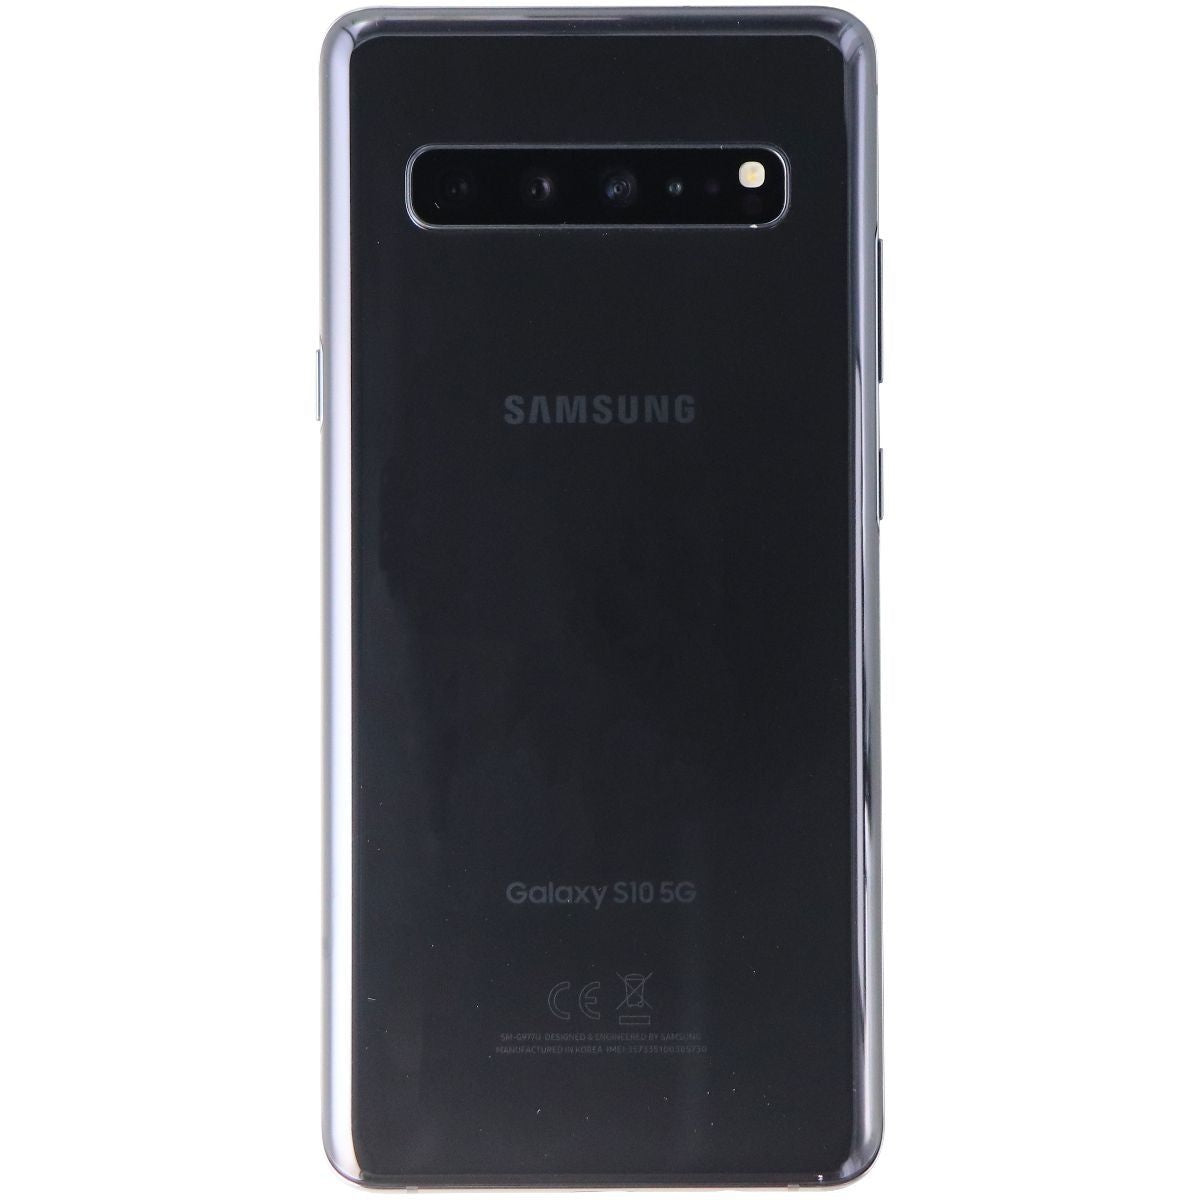 Samsung Galaxy S10 5G Smartphone (SM-G977U) Verizon Only - 256GB/Majestic Black Cell Phones & Smartphones Samsung    - Simple Cell Bulk Wholesale Pricing - USA Seller